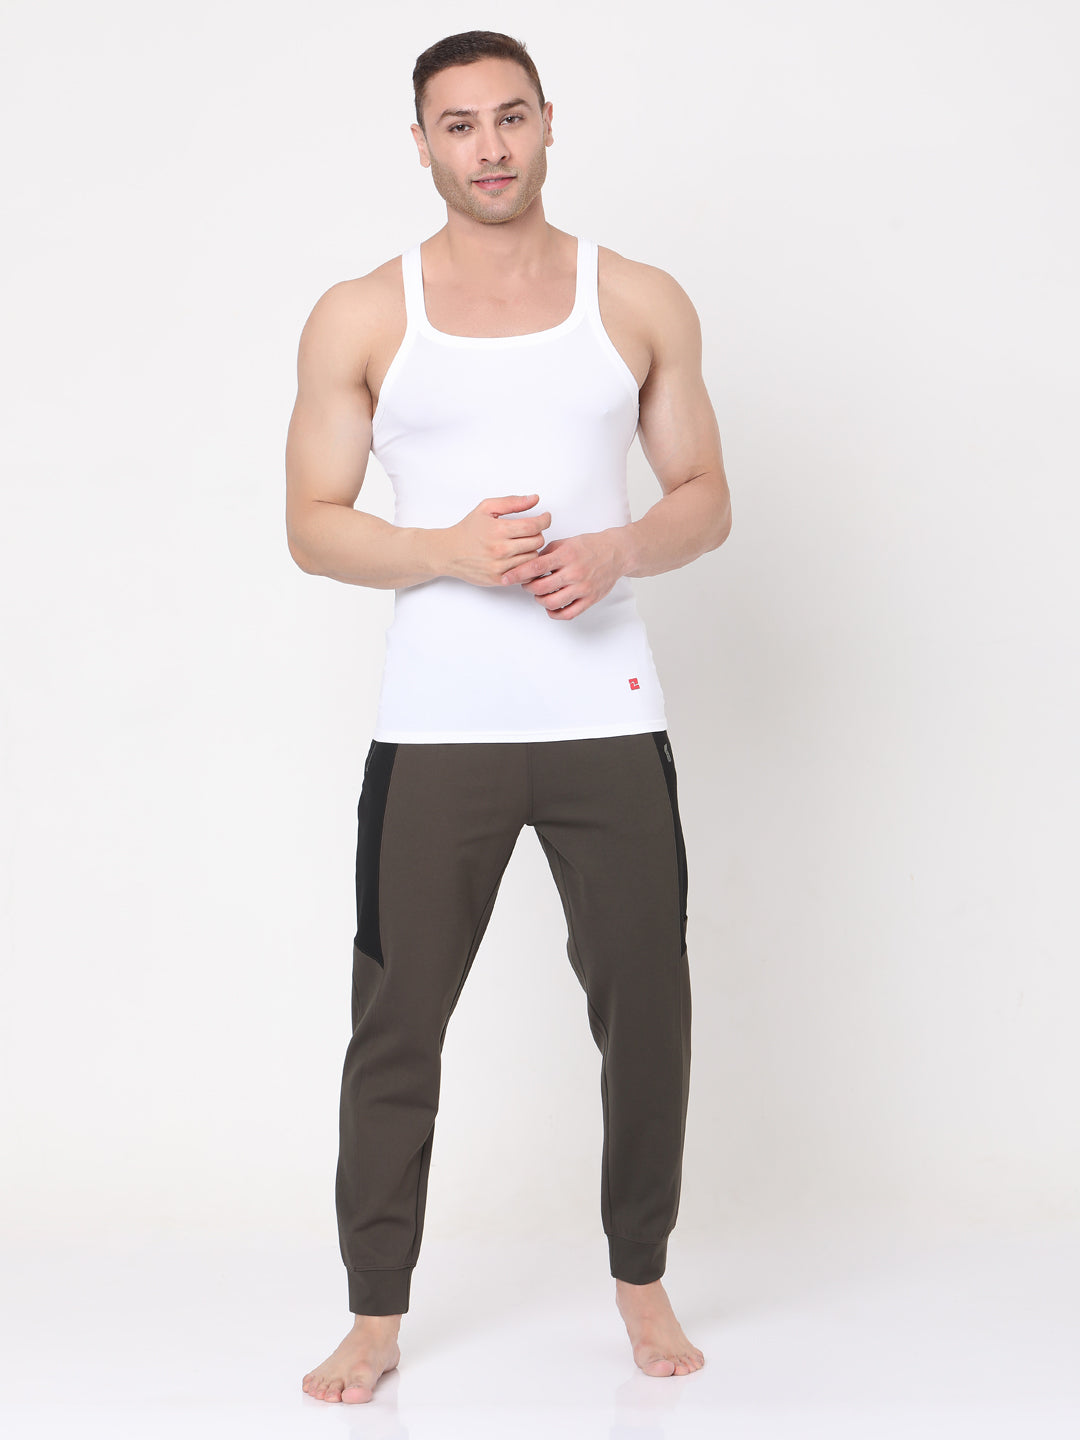 Men Premium White Vest- UnderJeans by Spykar